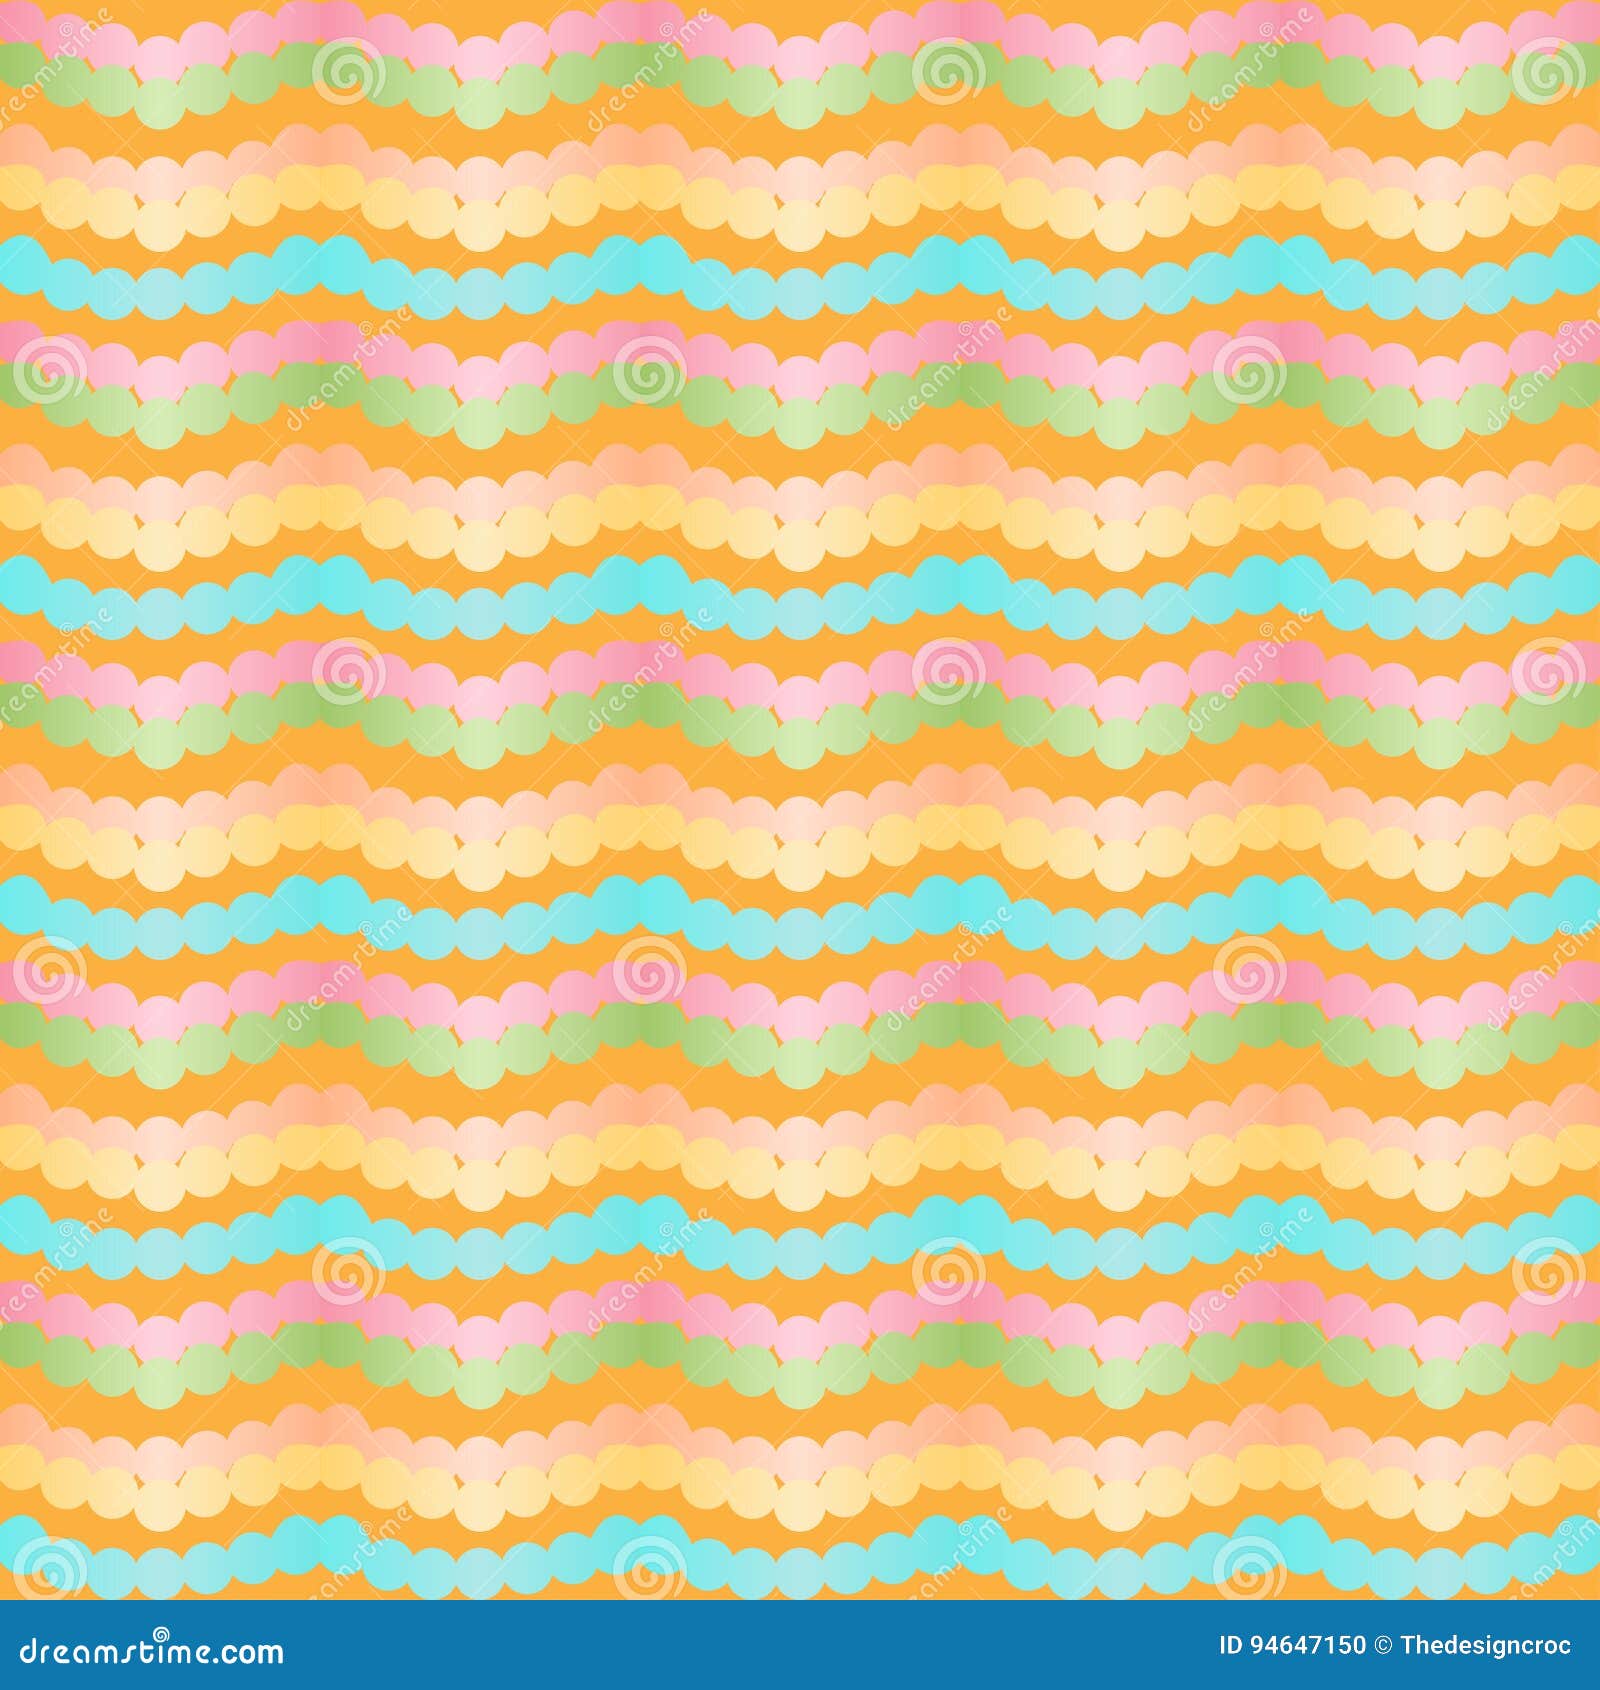 preppy patterns background